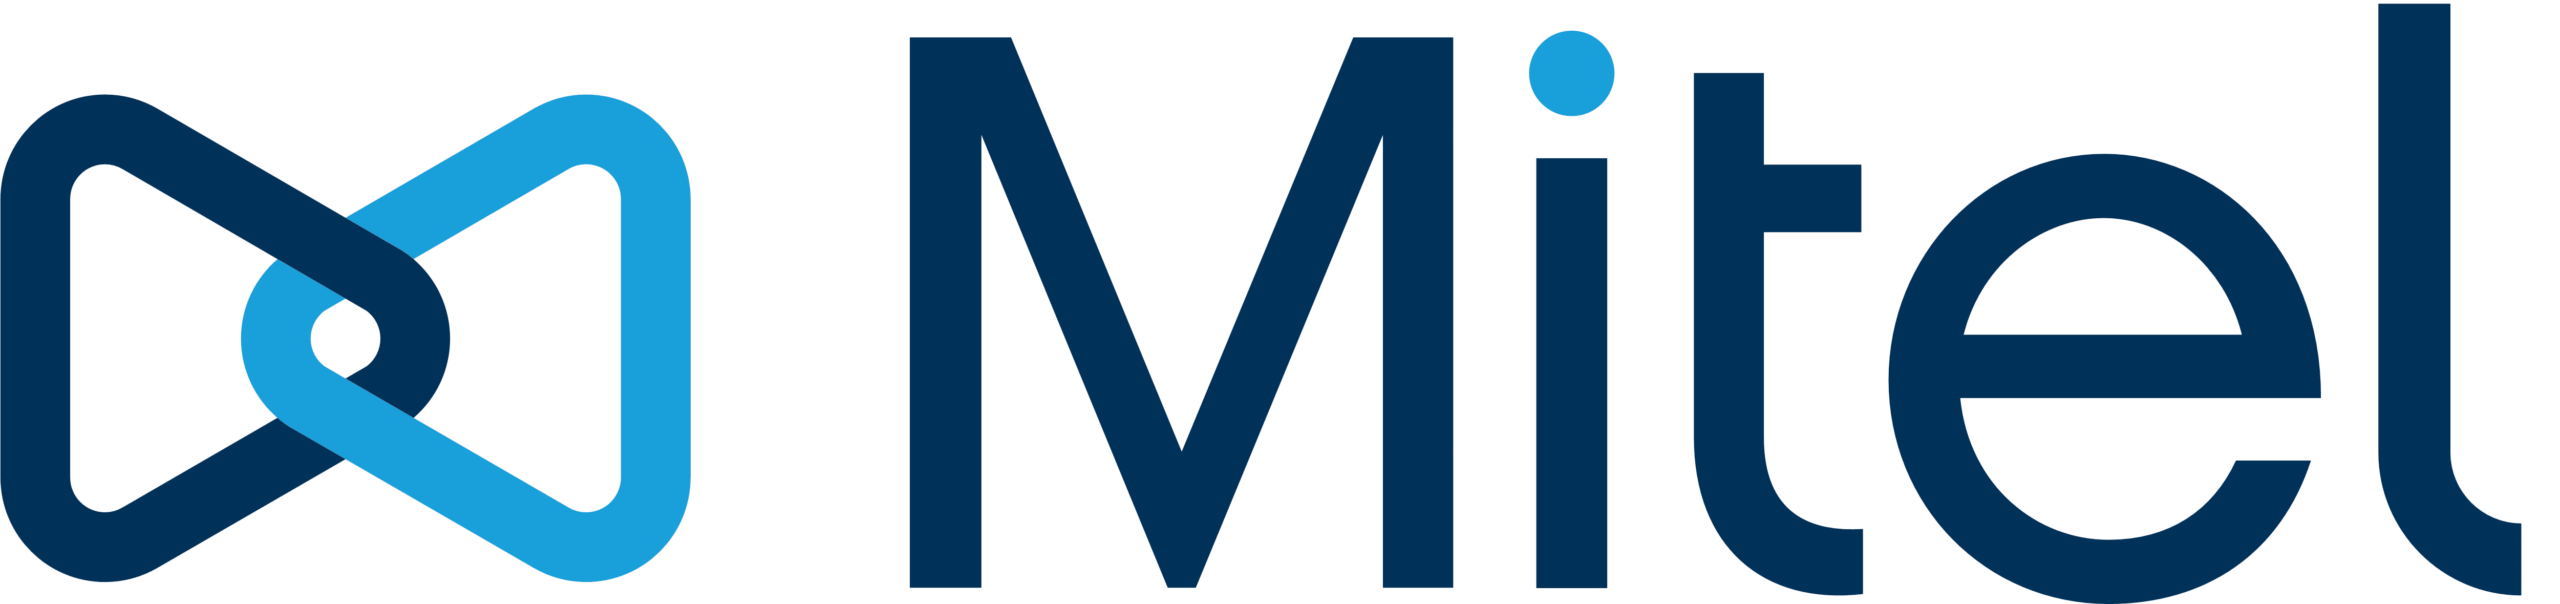 Mitel_logo-png